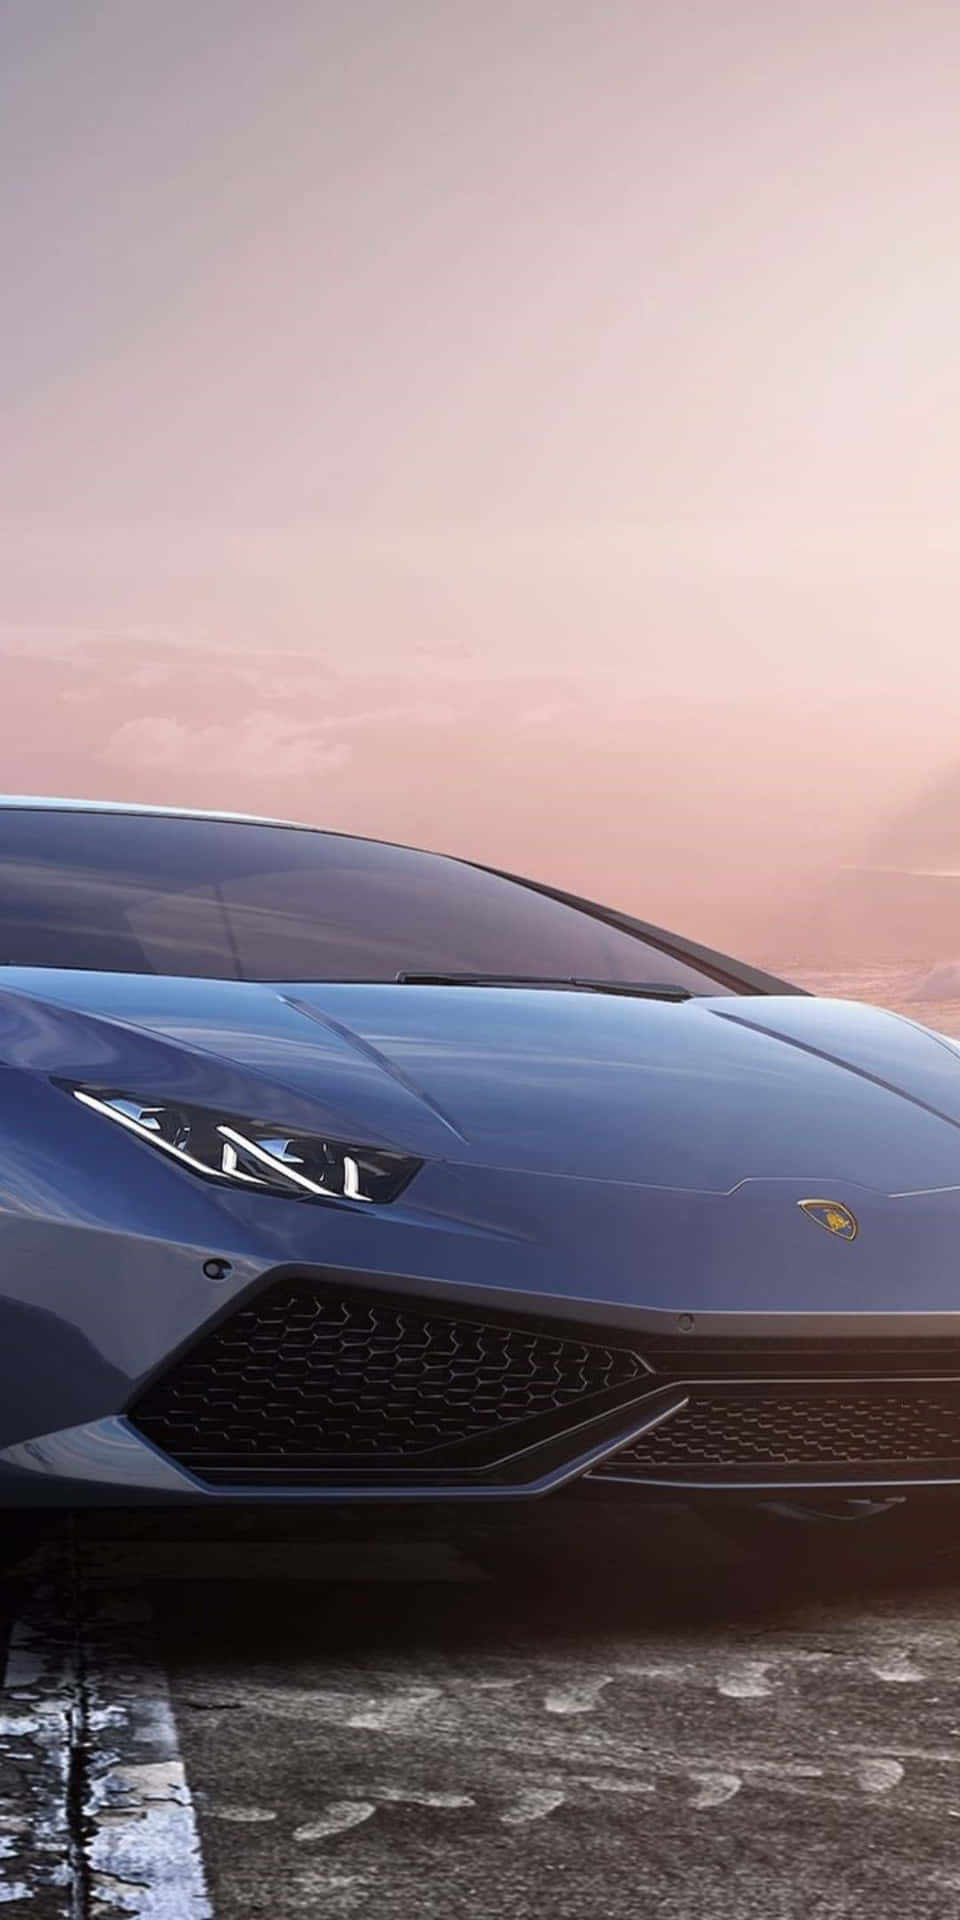 The Lamborghini Huracan Is Shown In The Sunset